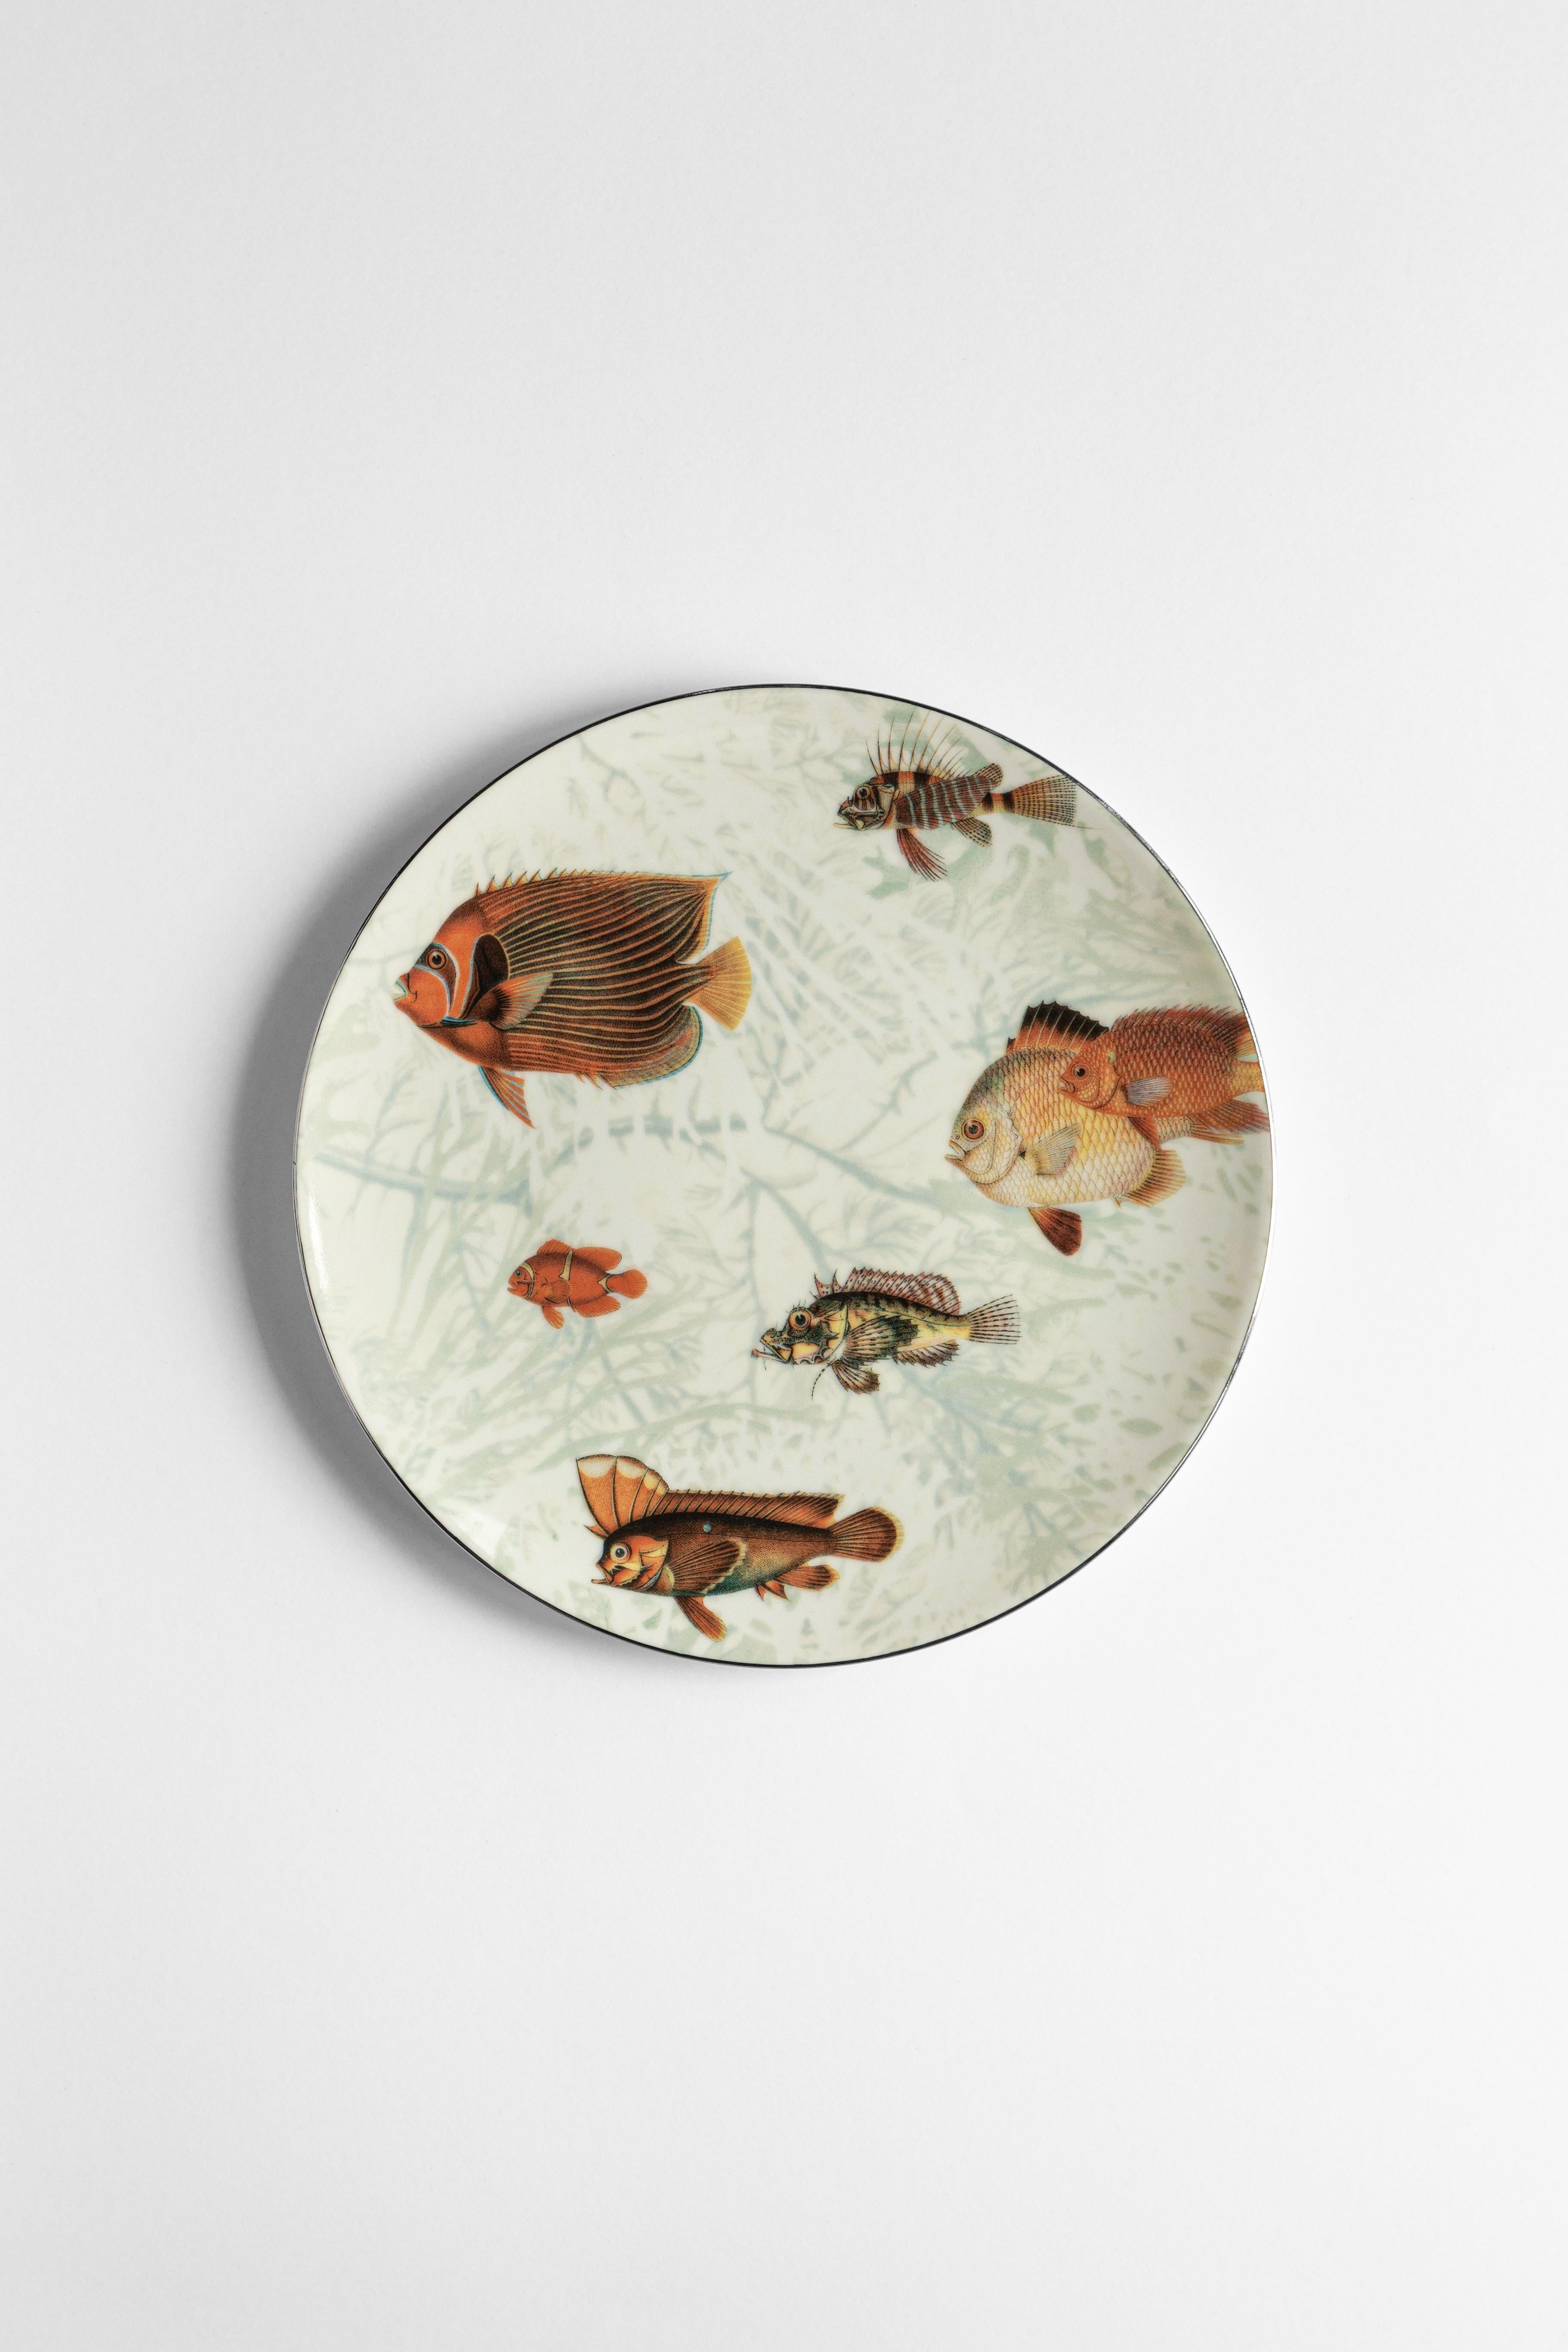 Amami, Six Contemporary Porcelain Dessert Plates with Decorative Design For Sale 3